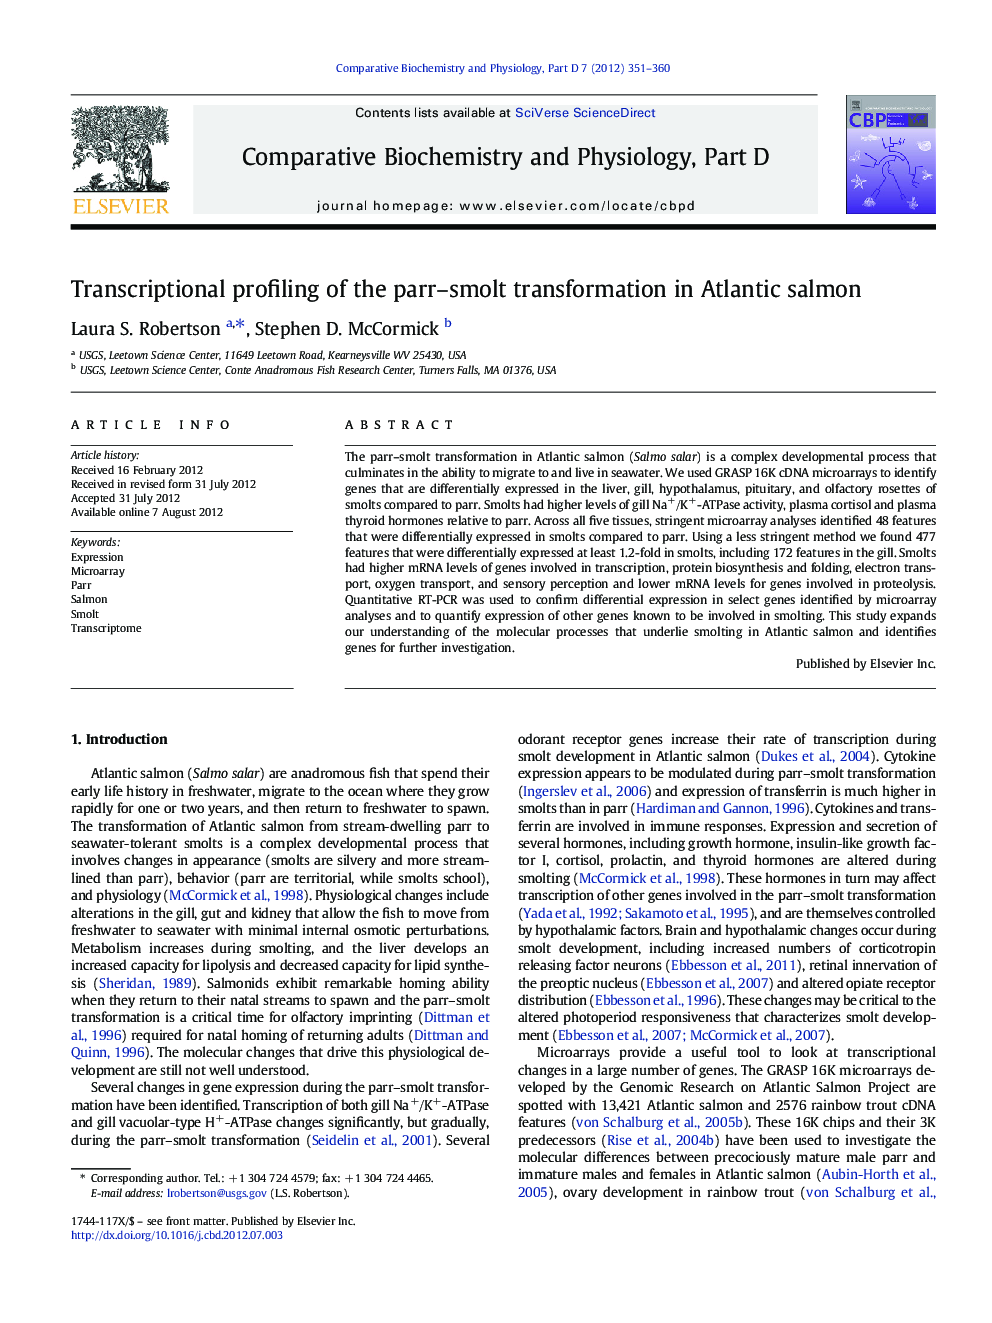 Transcriptional profiling of the parr–smolt transformation in Atlantic salmon